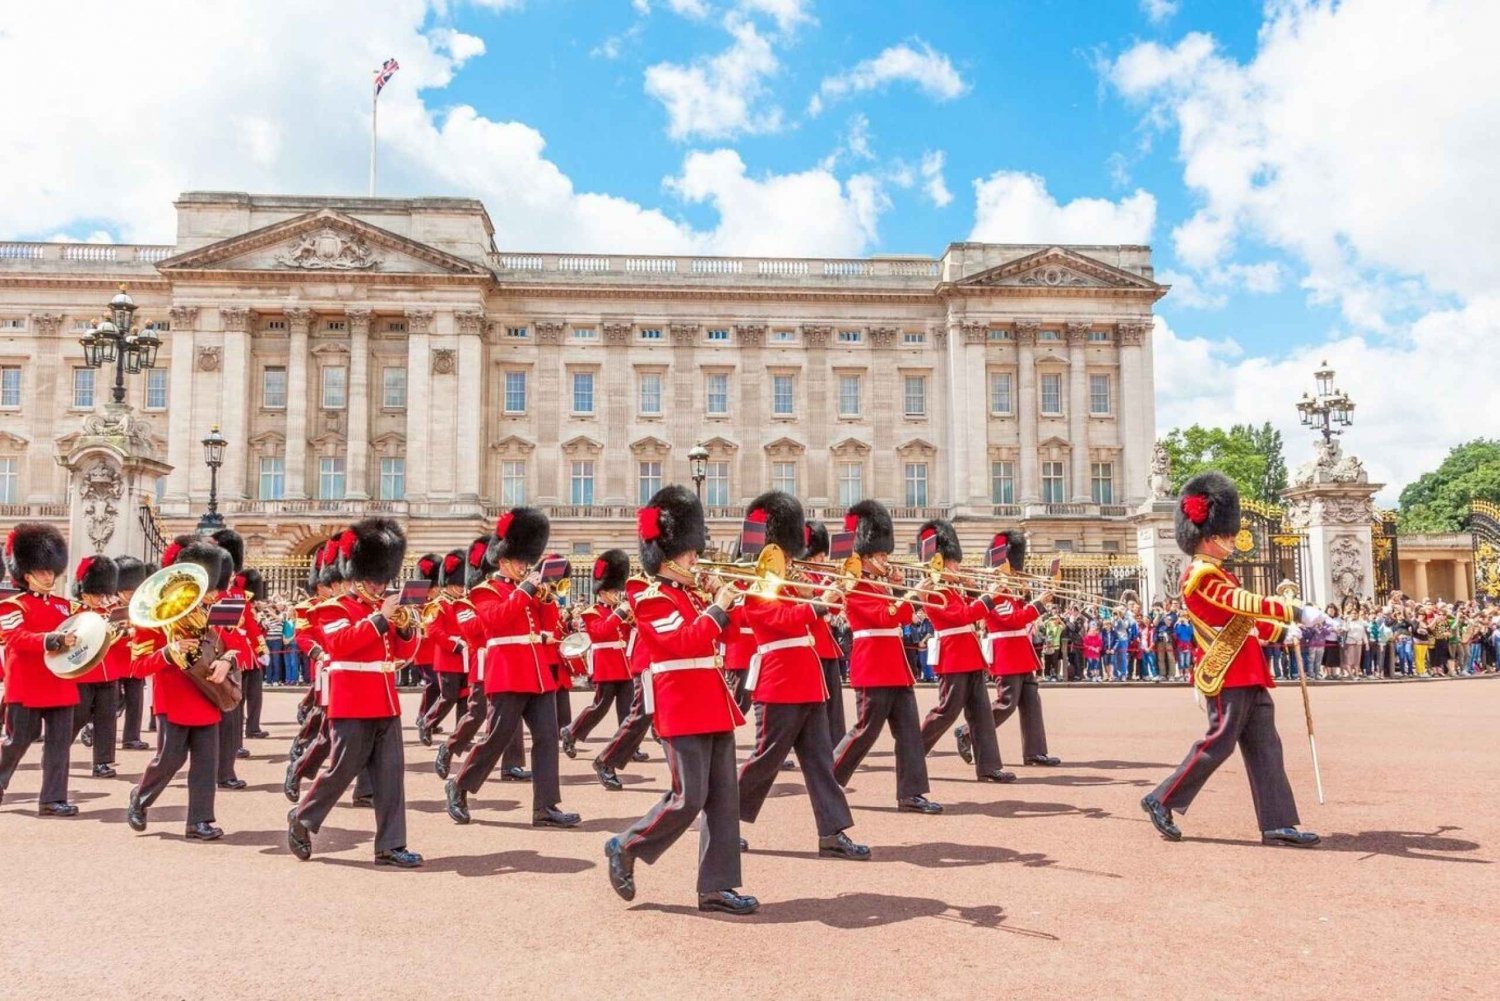 Royal London Tour inkl. Buckingham Palace og vaktskifte